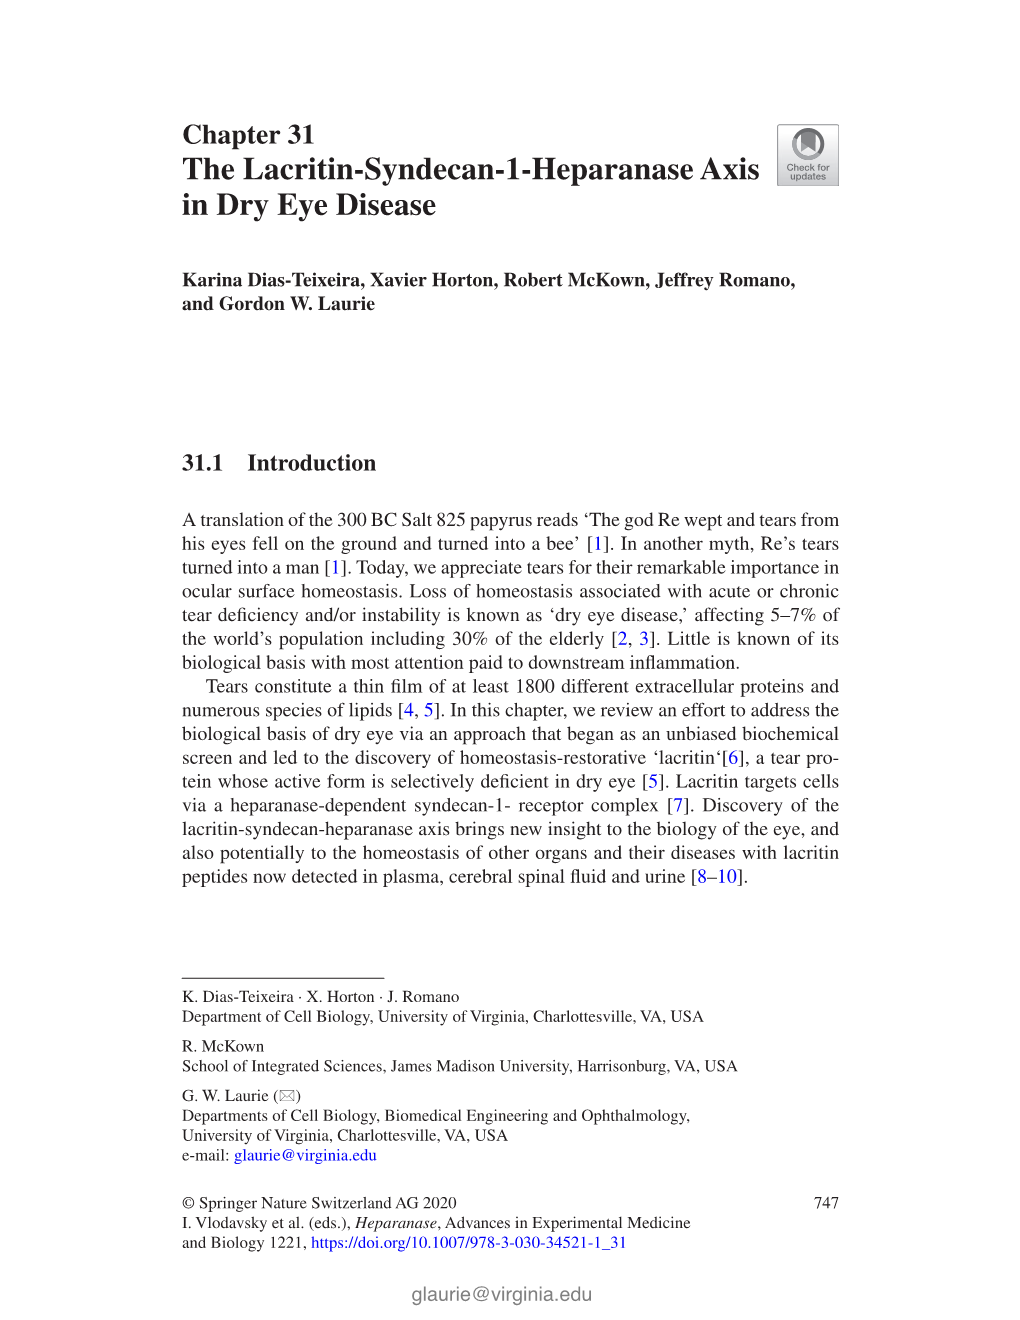 The Lacritin-Syndecan-1-Heparanase Axis in Dry Eye Disease